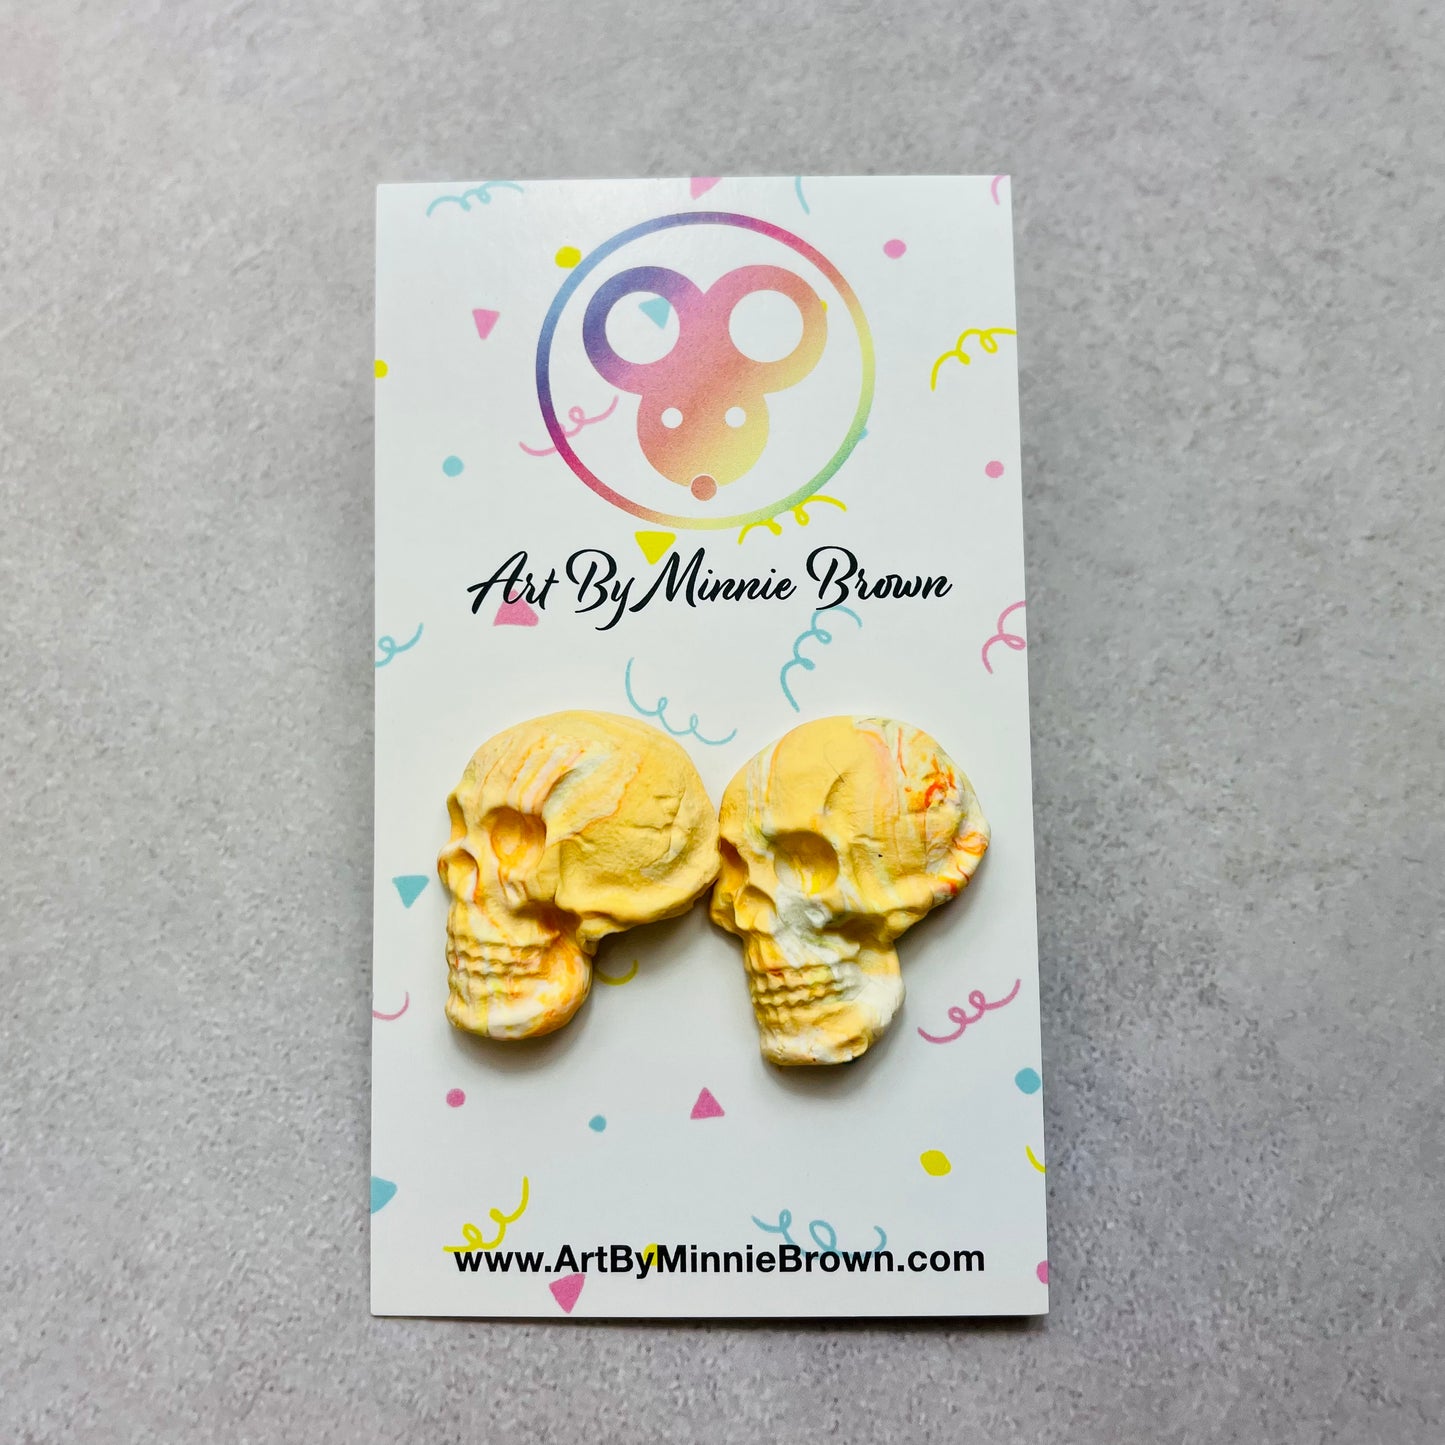 XXL Candy Corn Skulls Stud Earrings - Perfect for Halloween!